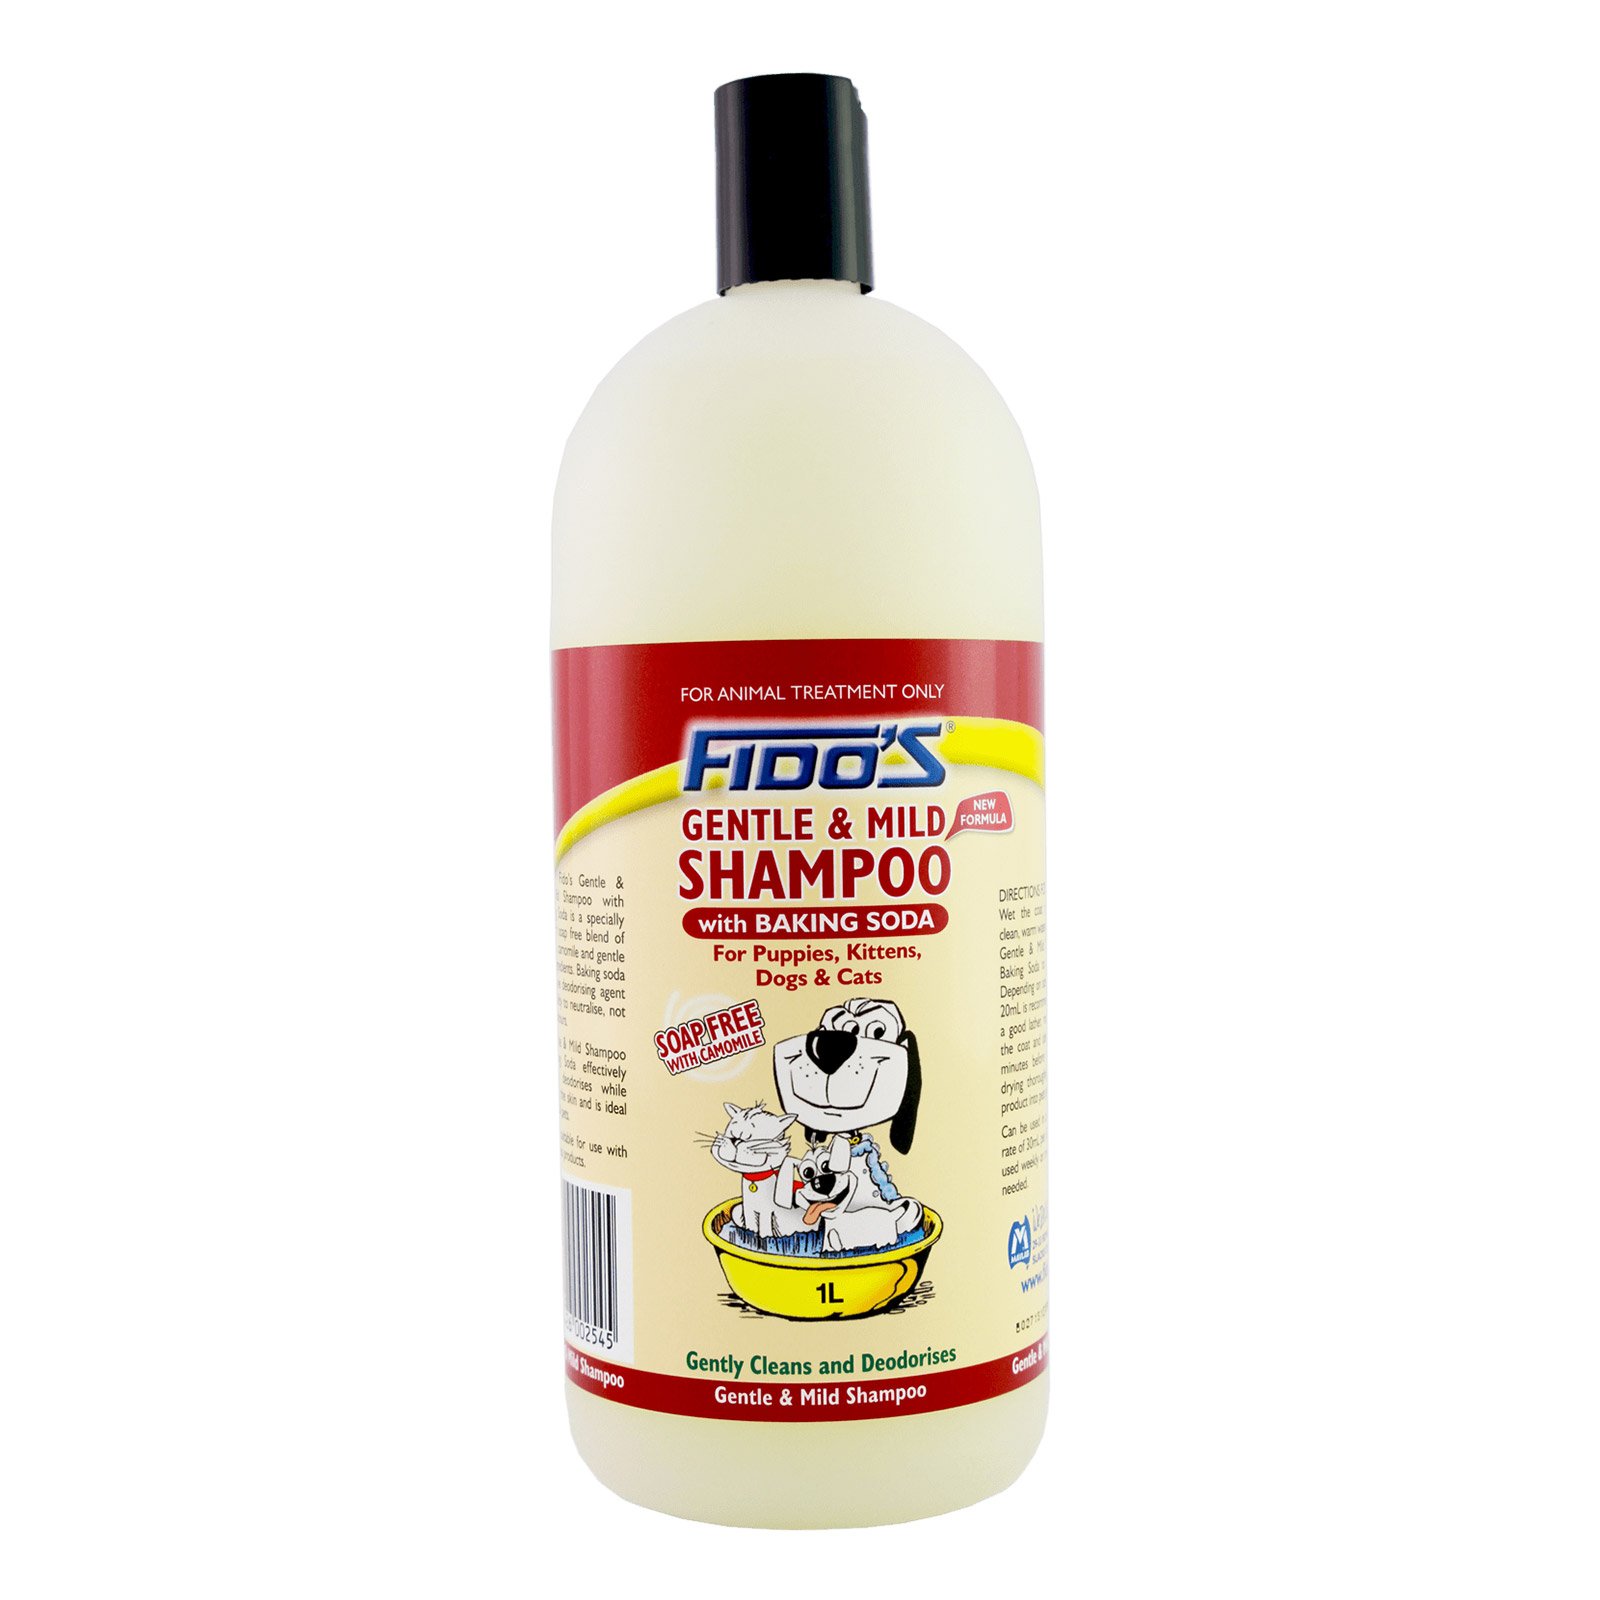 Fido's Gentle & Mild Shampoo